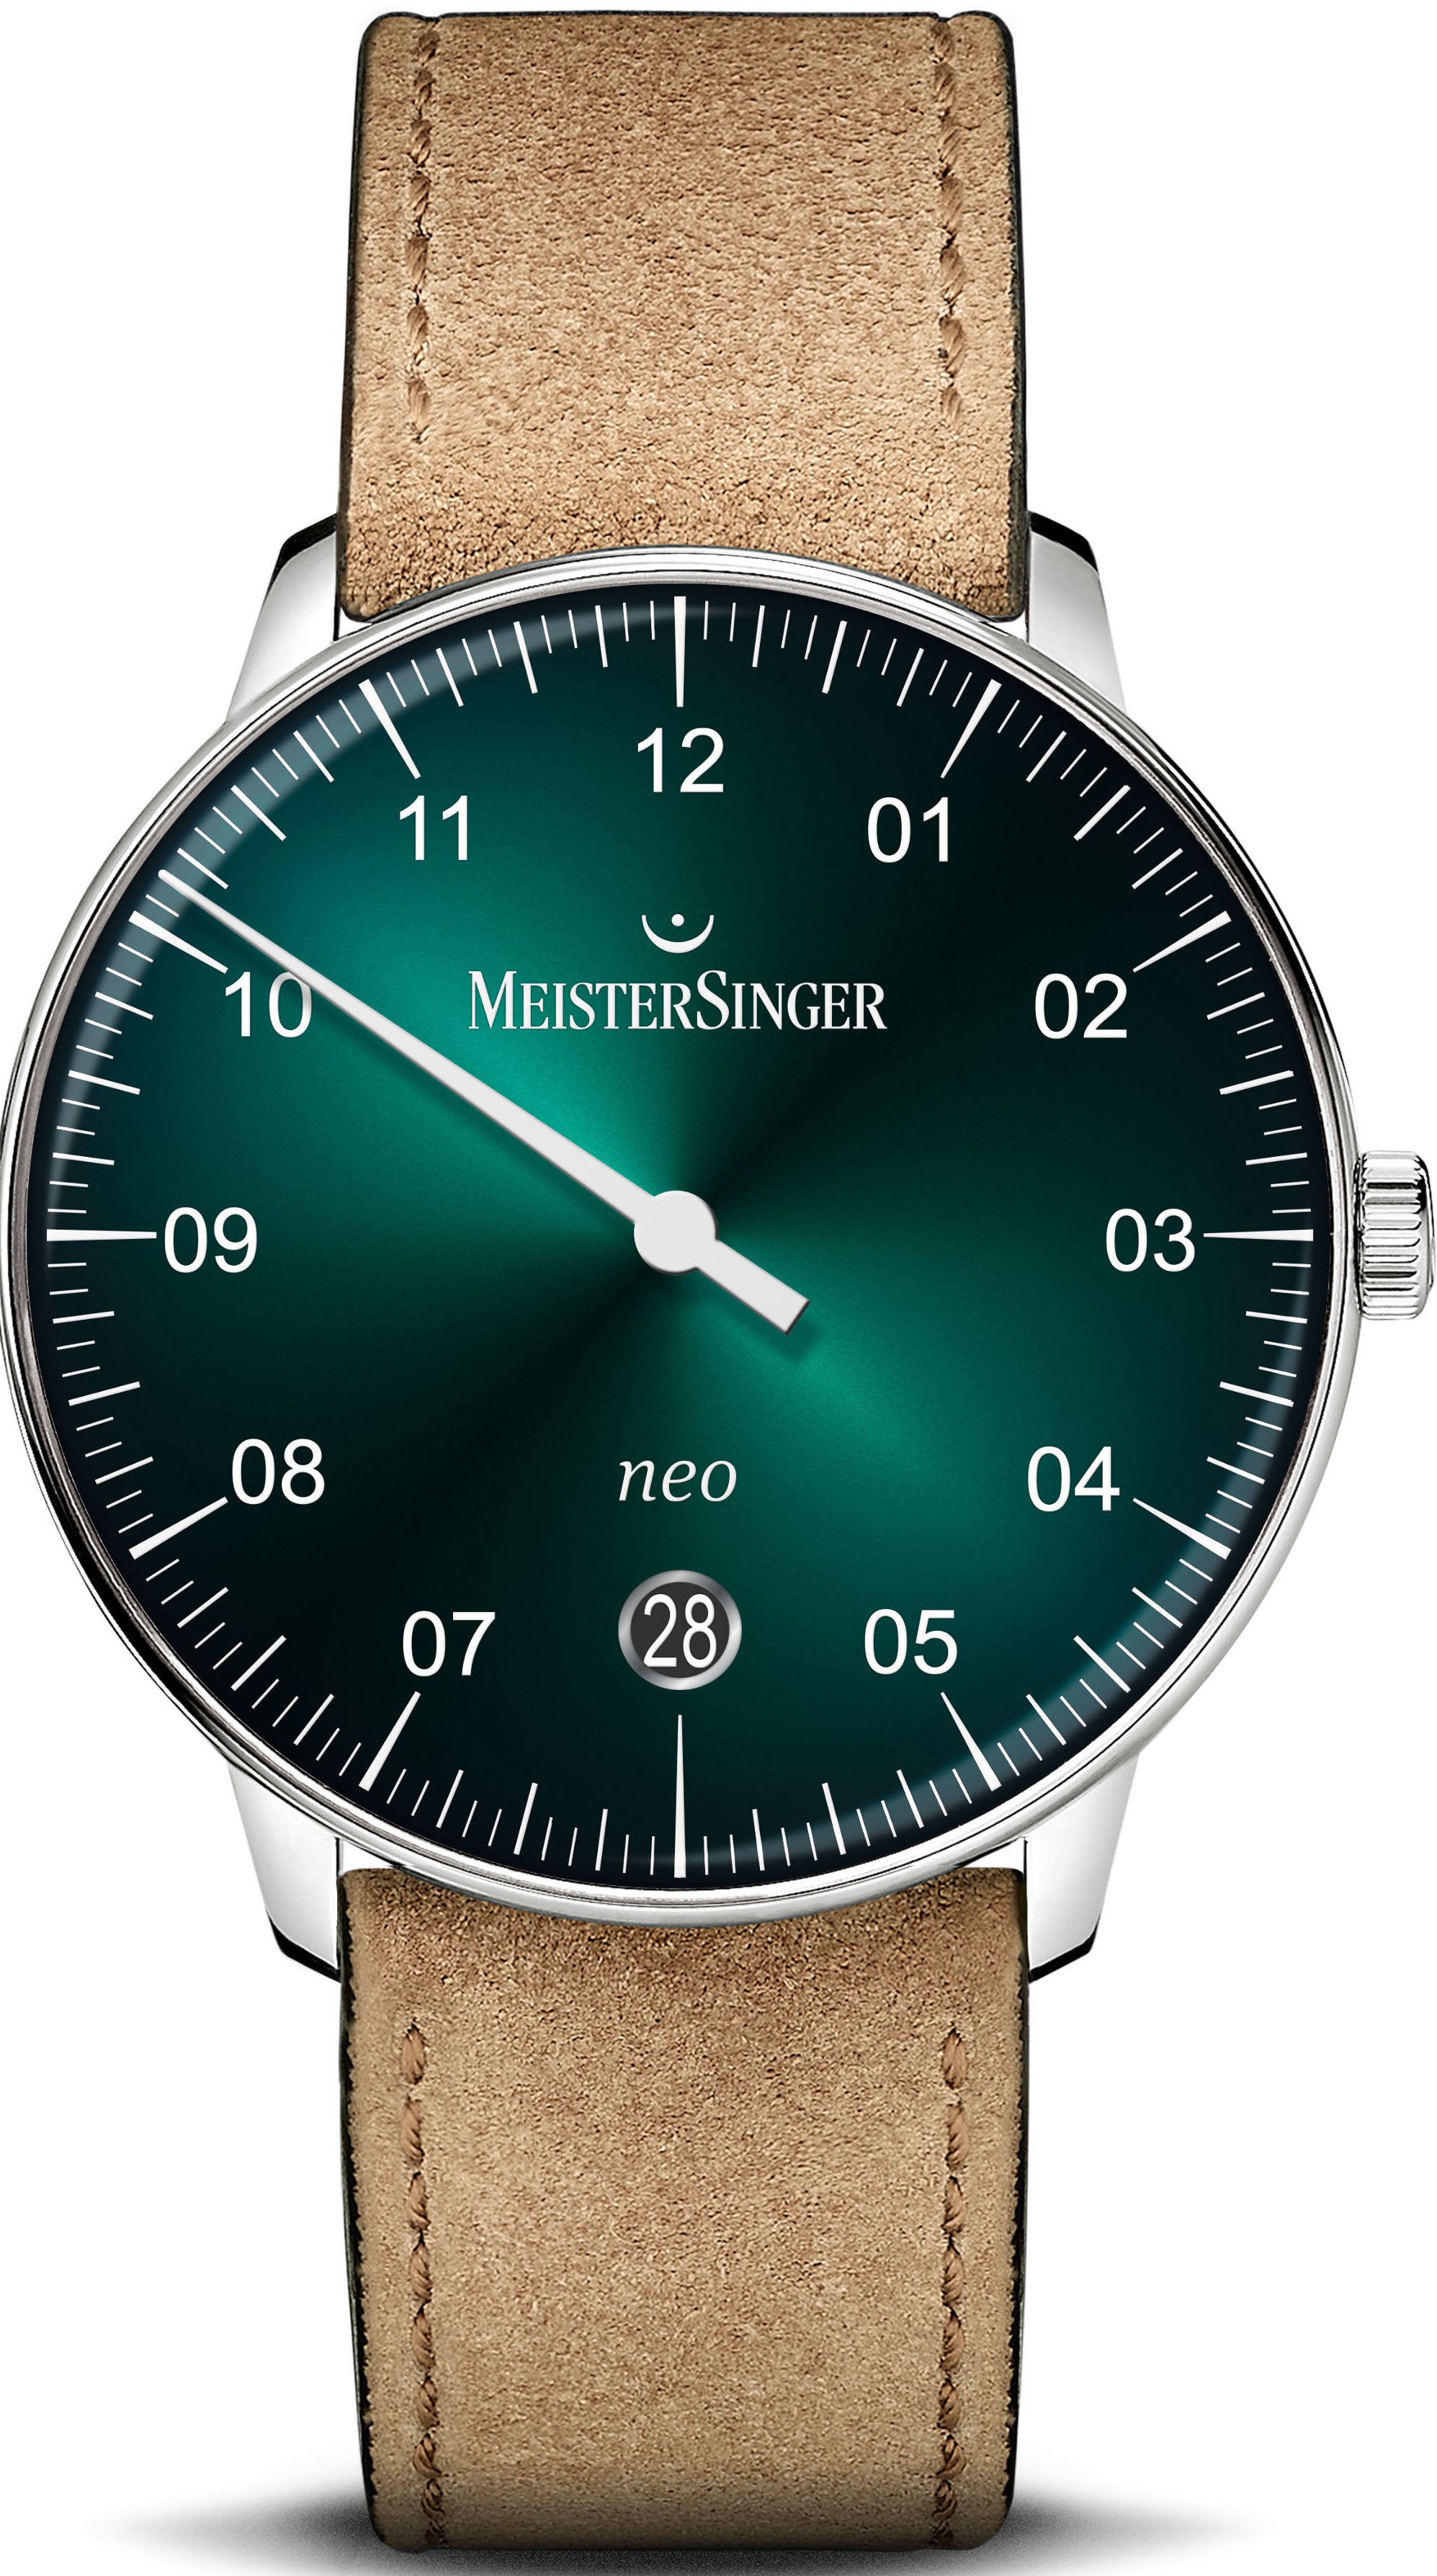 Photos - Wrist Watch MeisterSinger Watch Neo 36 Green Sunburst - Green MS-373 